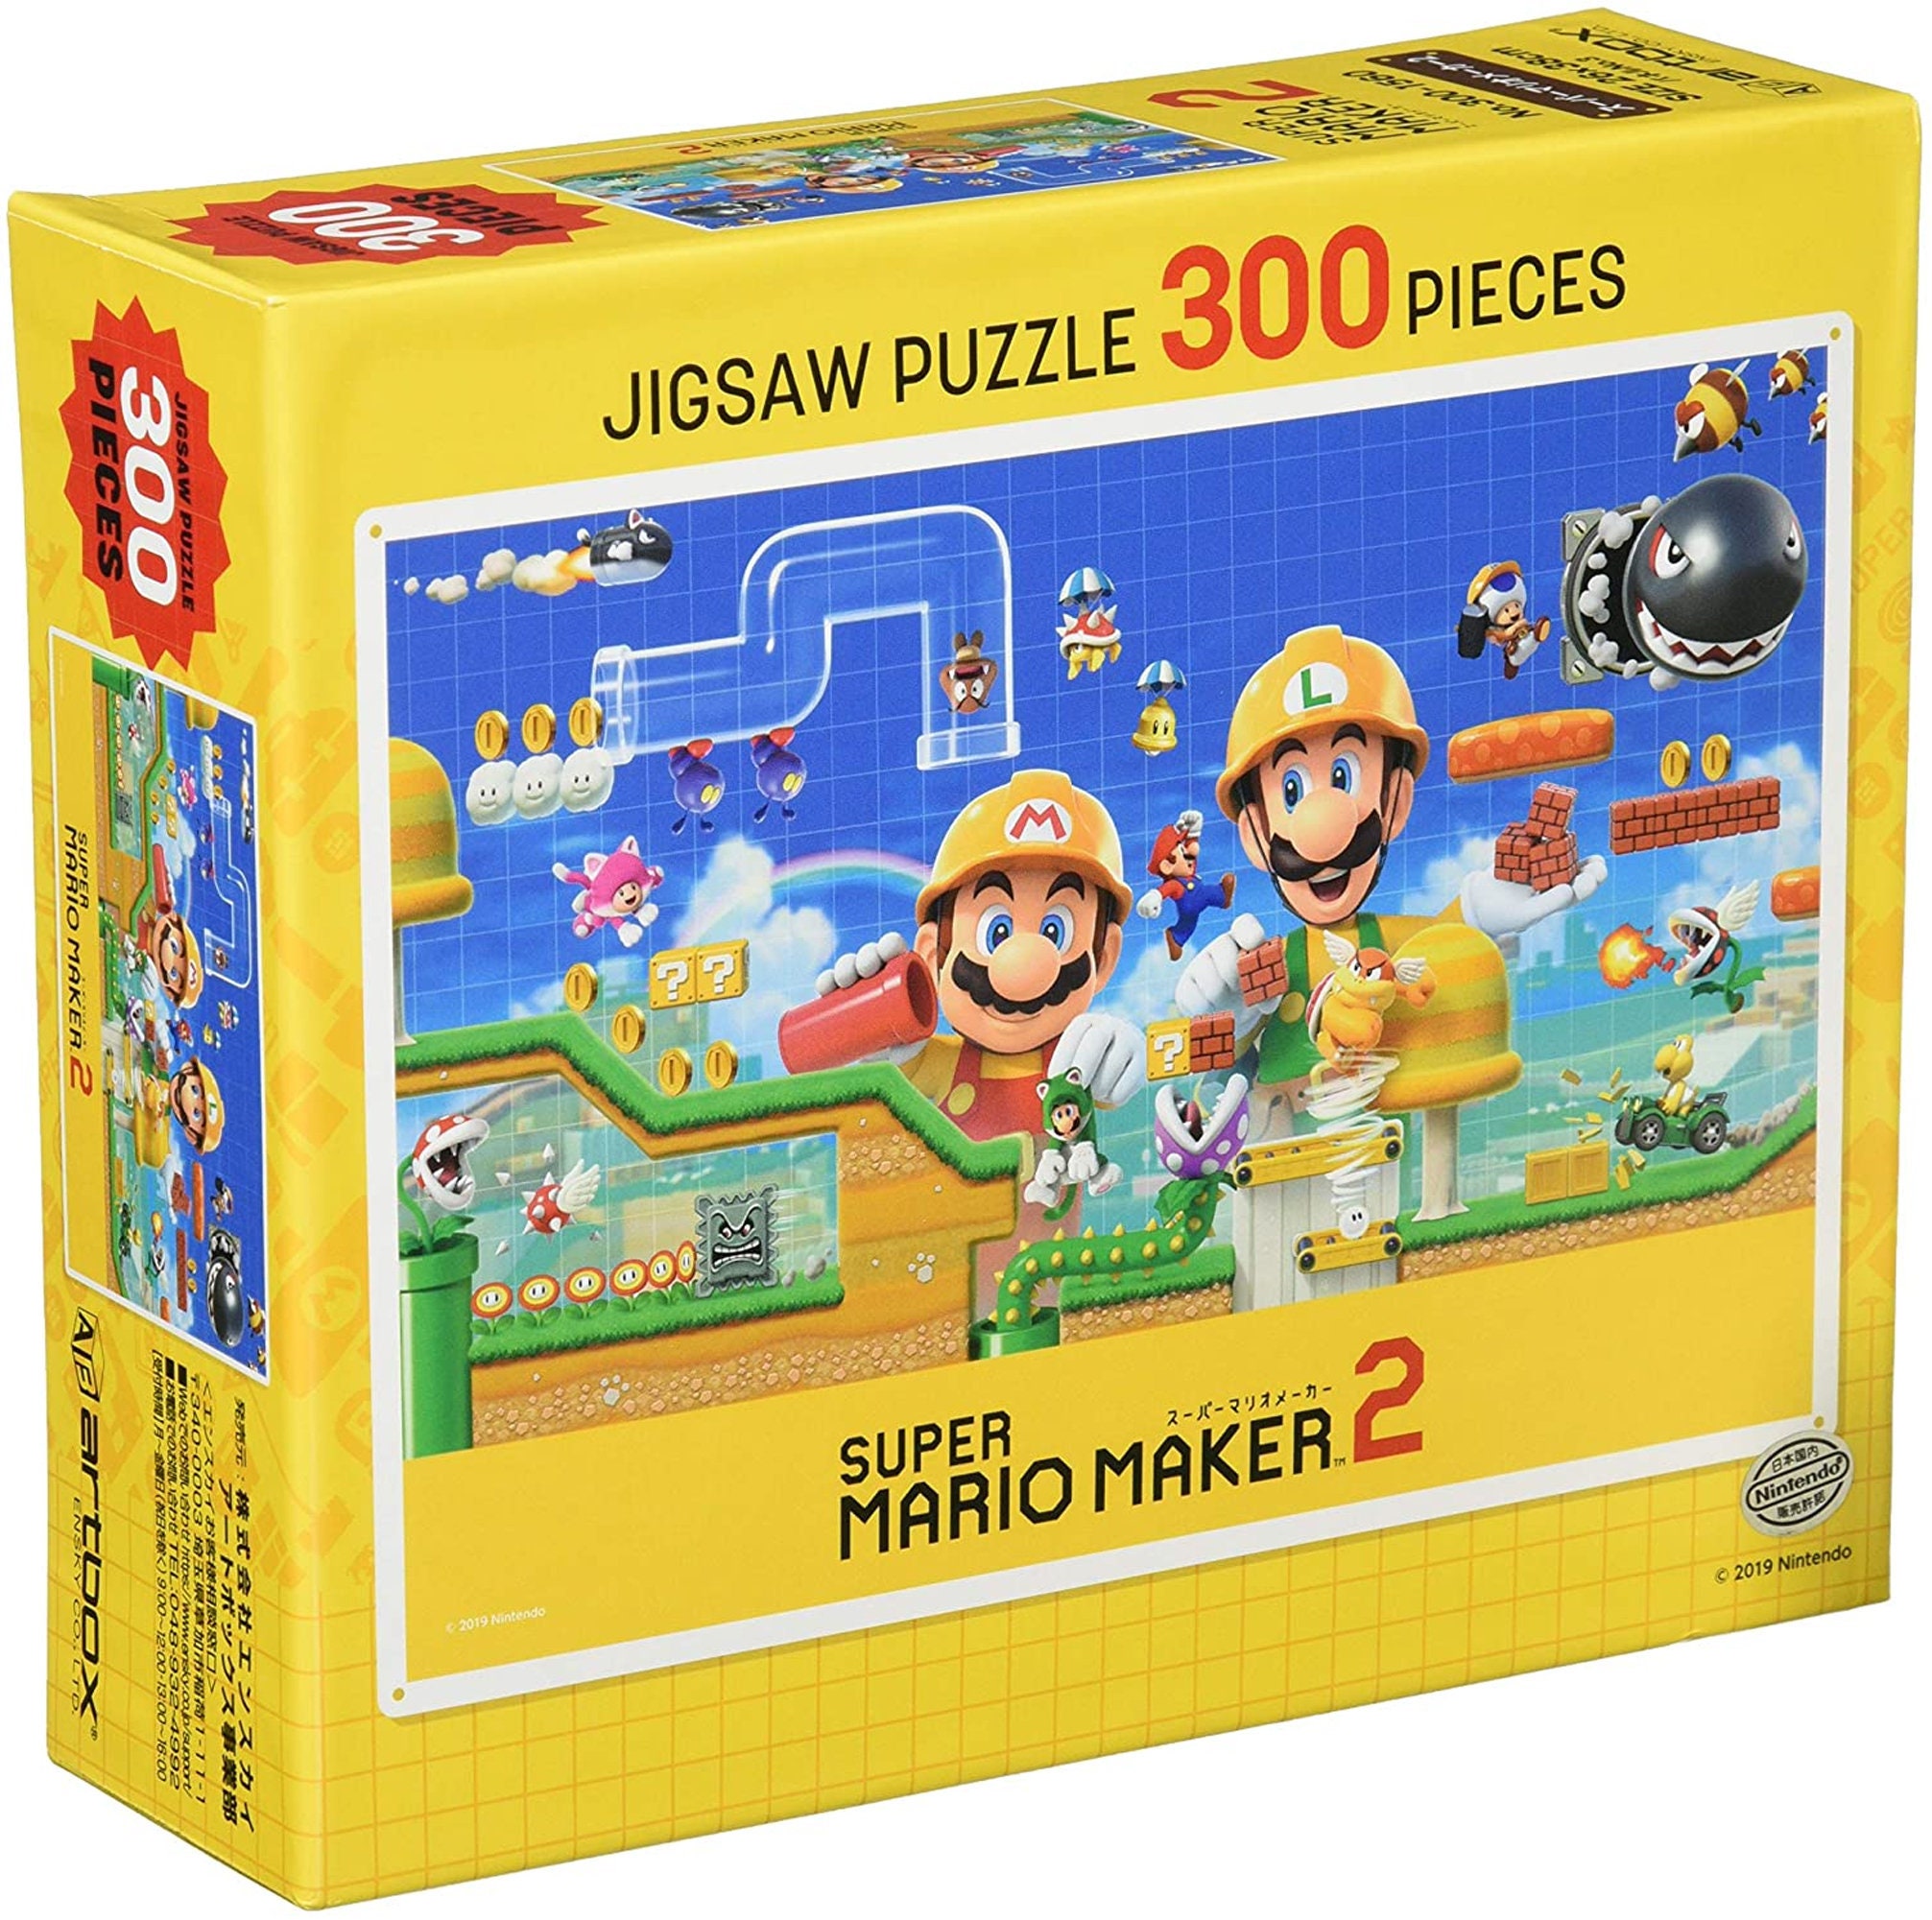 Tibio plan de ventas Goteo ENSKY 300 Pieces Jigsaw Puzzle Super Mario Maker 226x38cm - Etsy